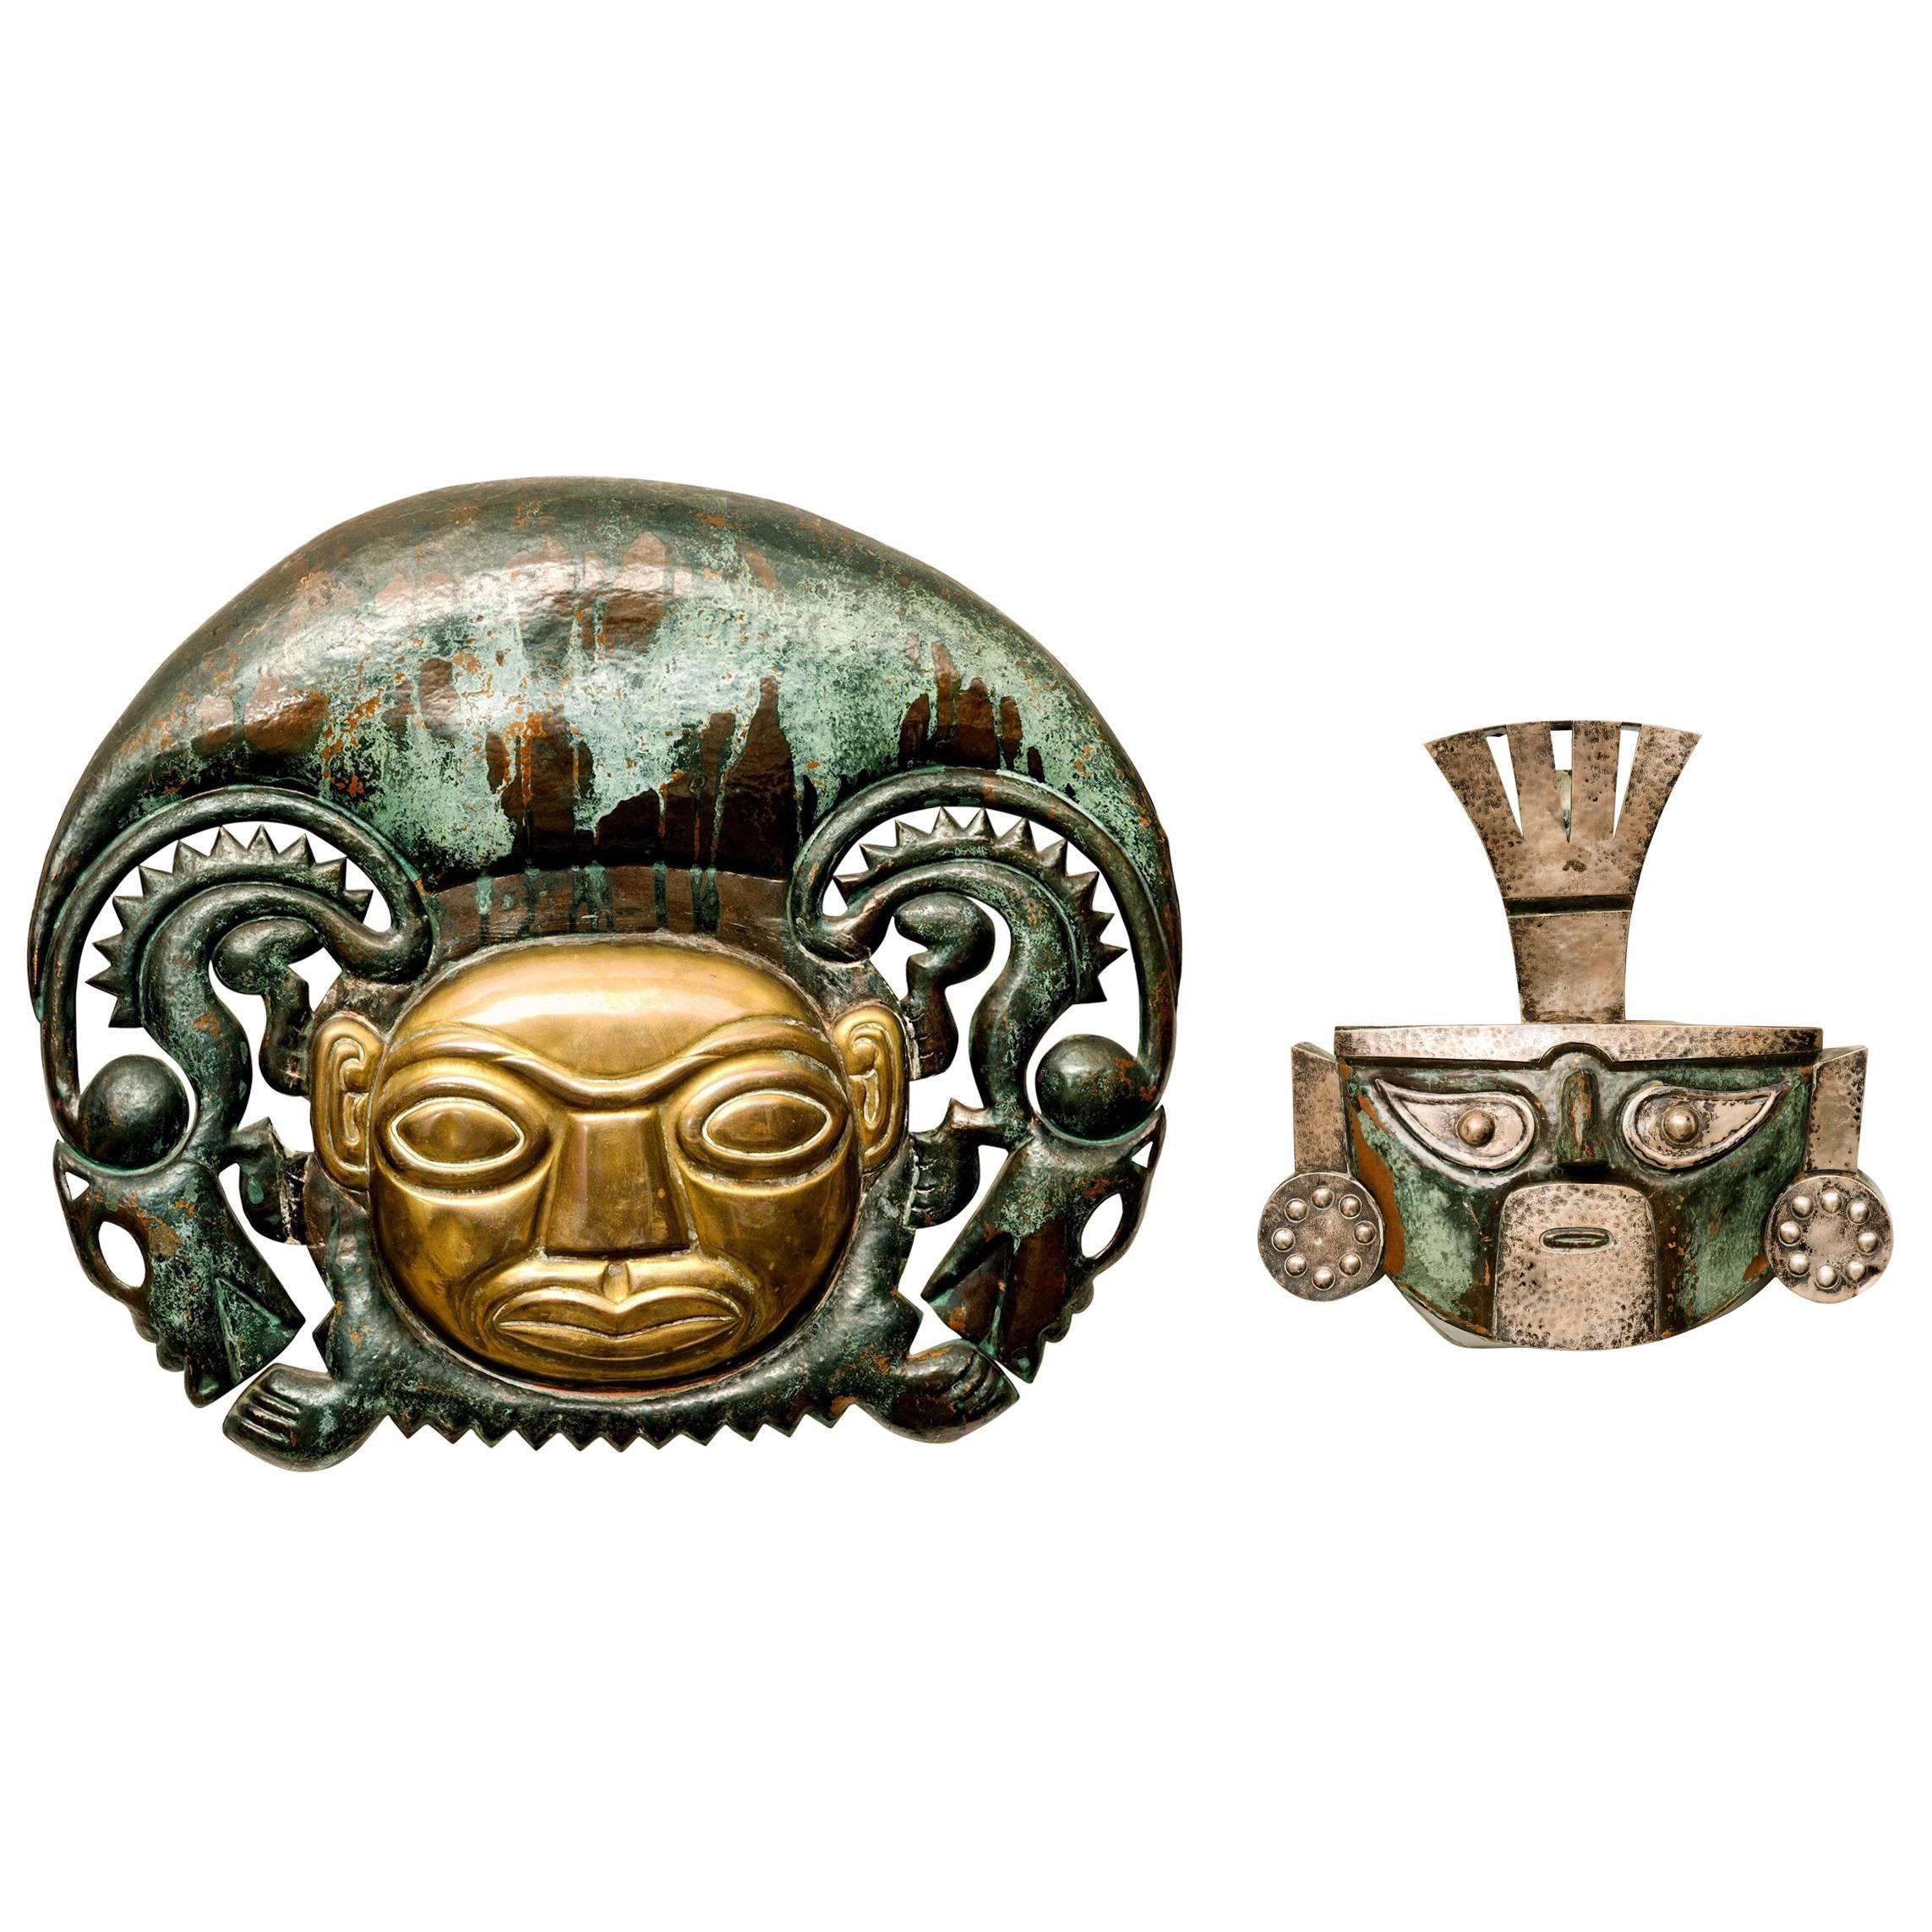 Pair of Peruvian Mask Sculptures Attributed to Graziella Laffi 